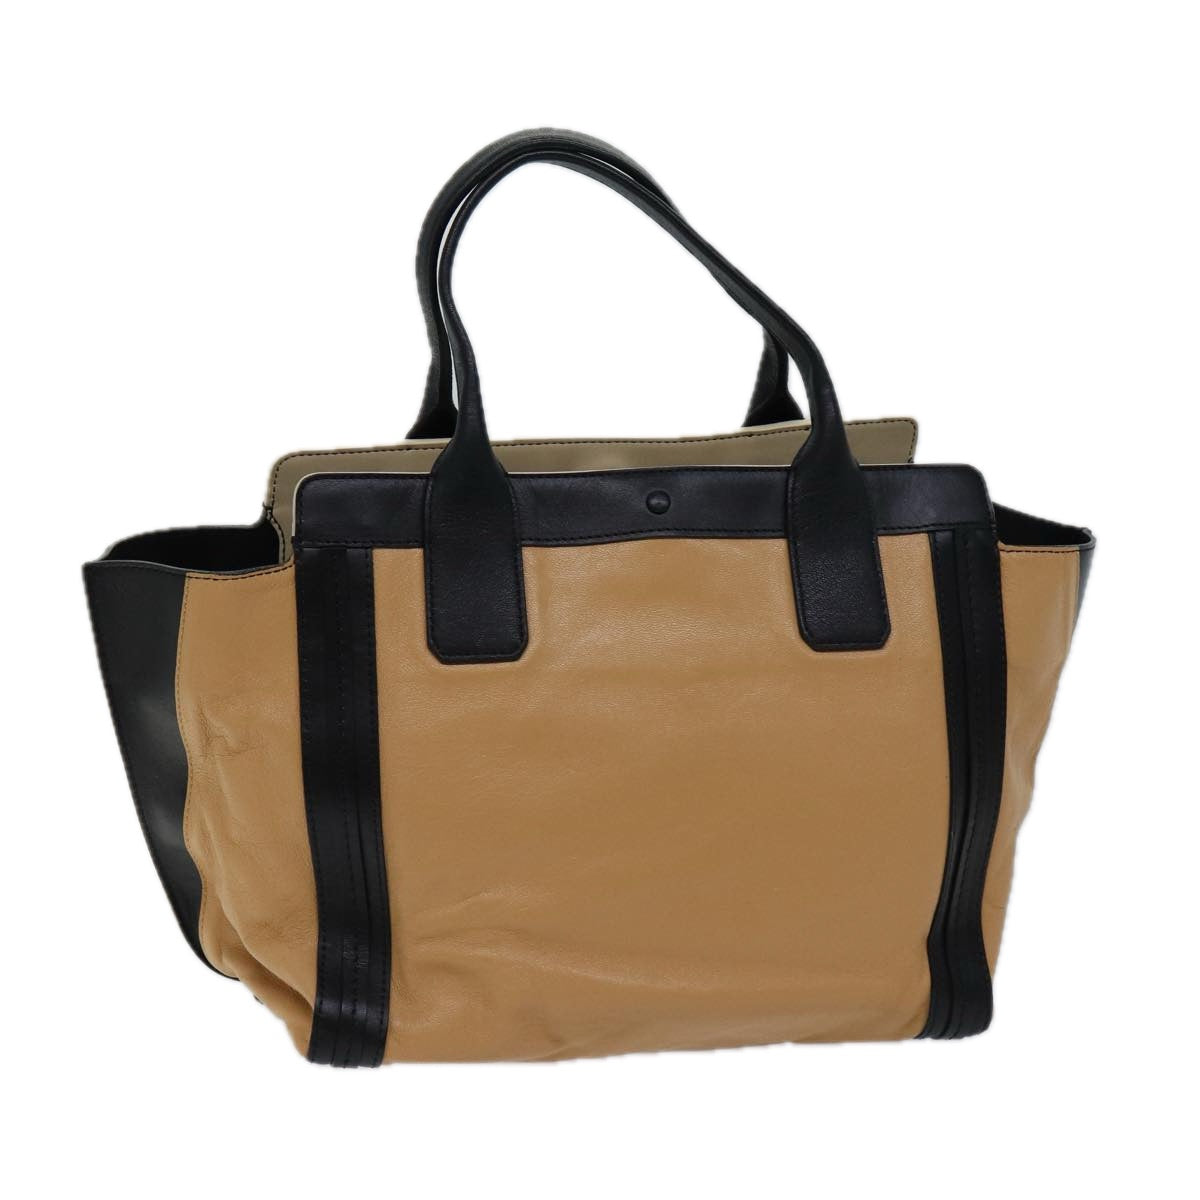 Chloe Hand Bag Leather Beige 01 14 50 65 Auth yk11323